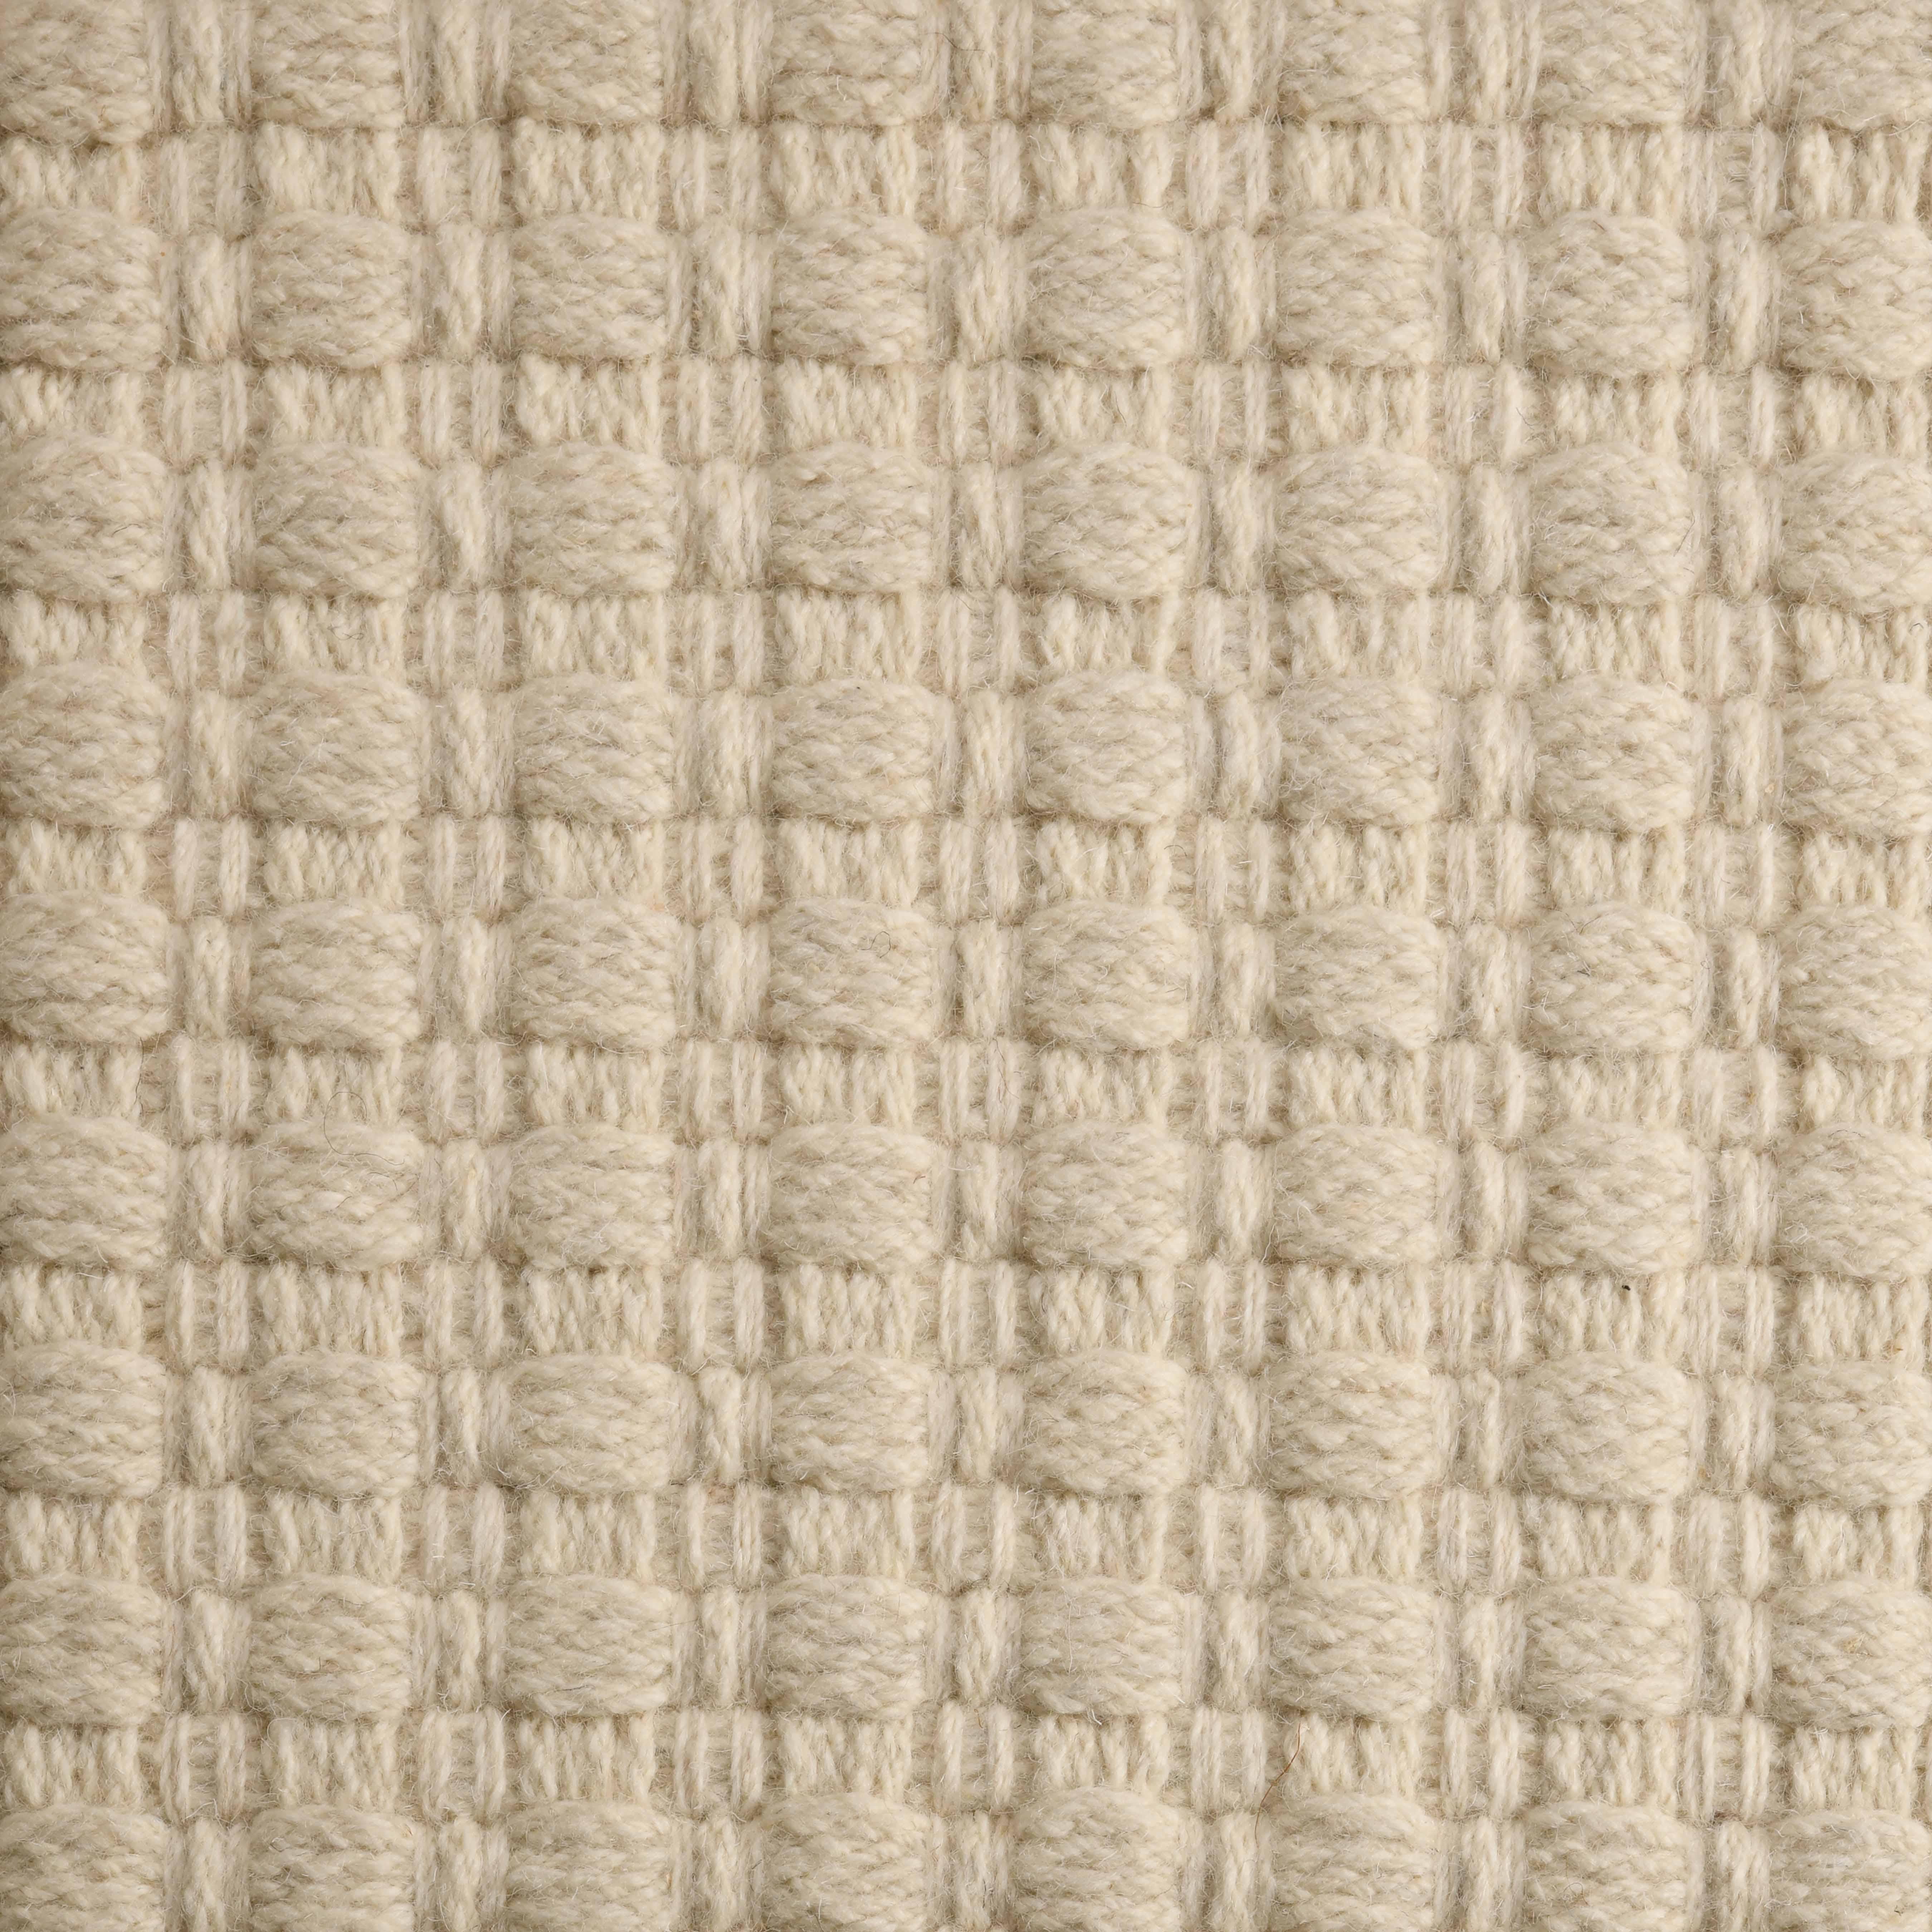 Una, Ecru, Handwoven Face 60% Undyed NZ Wool, 40% Undyed MED Wool, 6' x 9' For Sale